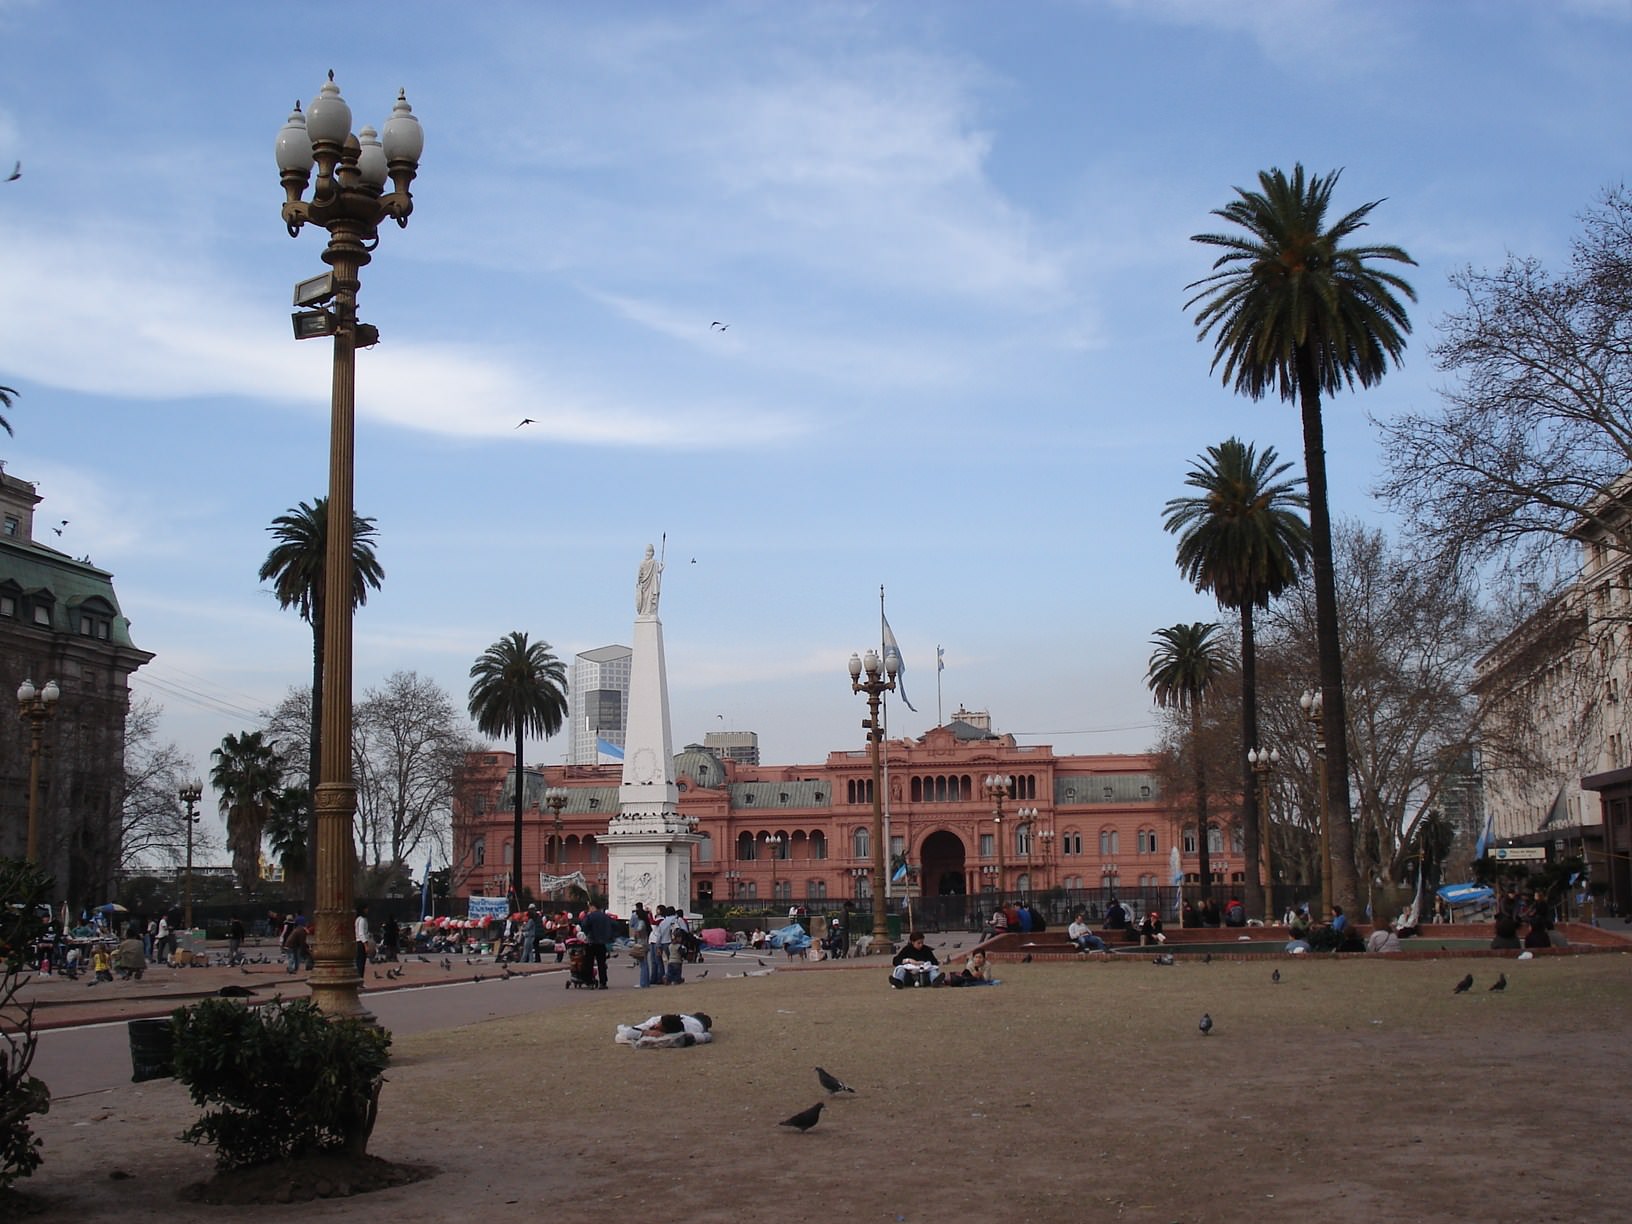 Argentine Plaza de Mayo